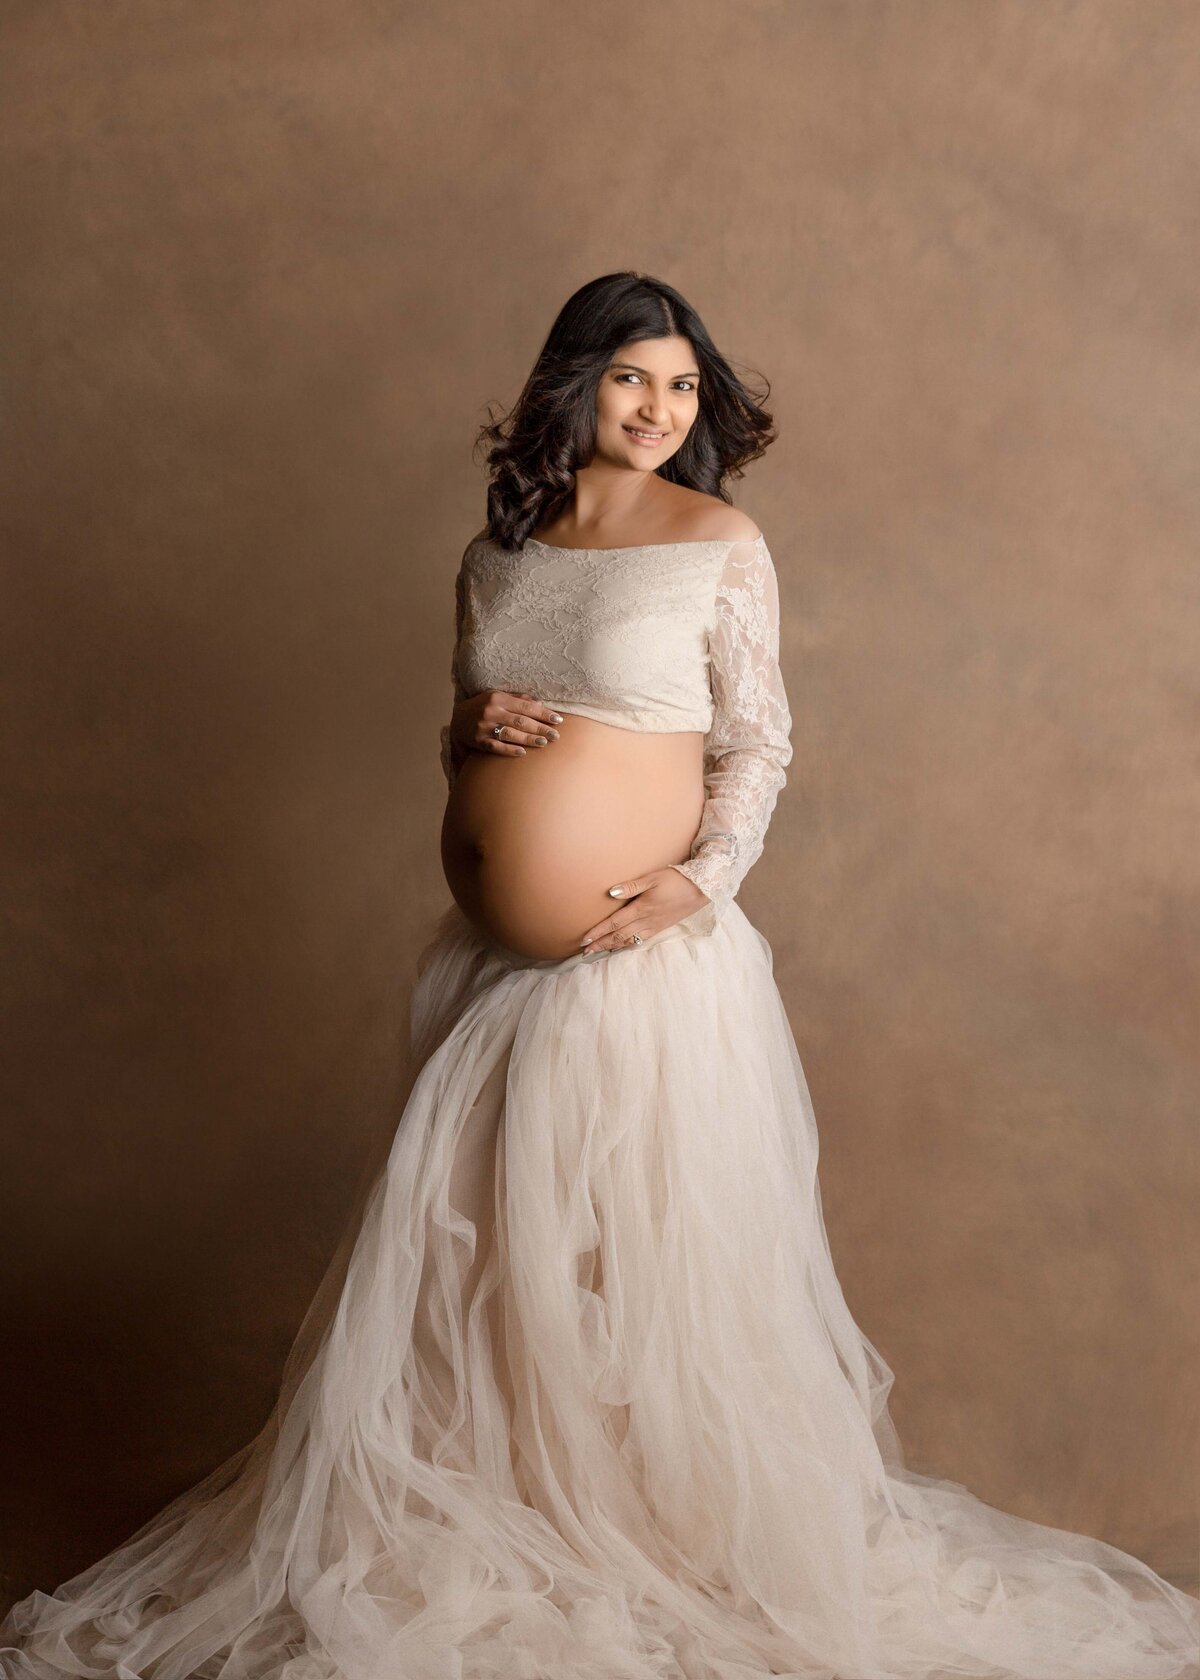 Belliam Photos - Calgary Maternity Photographer-9